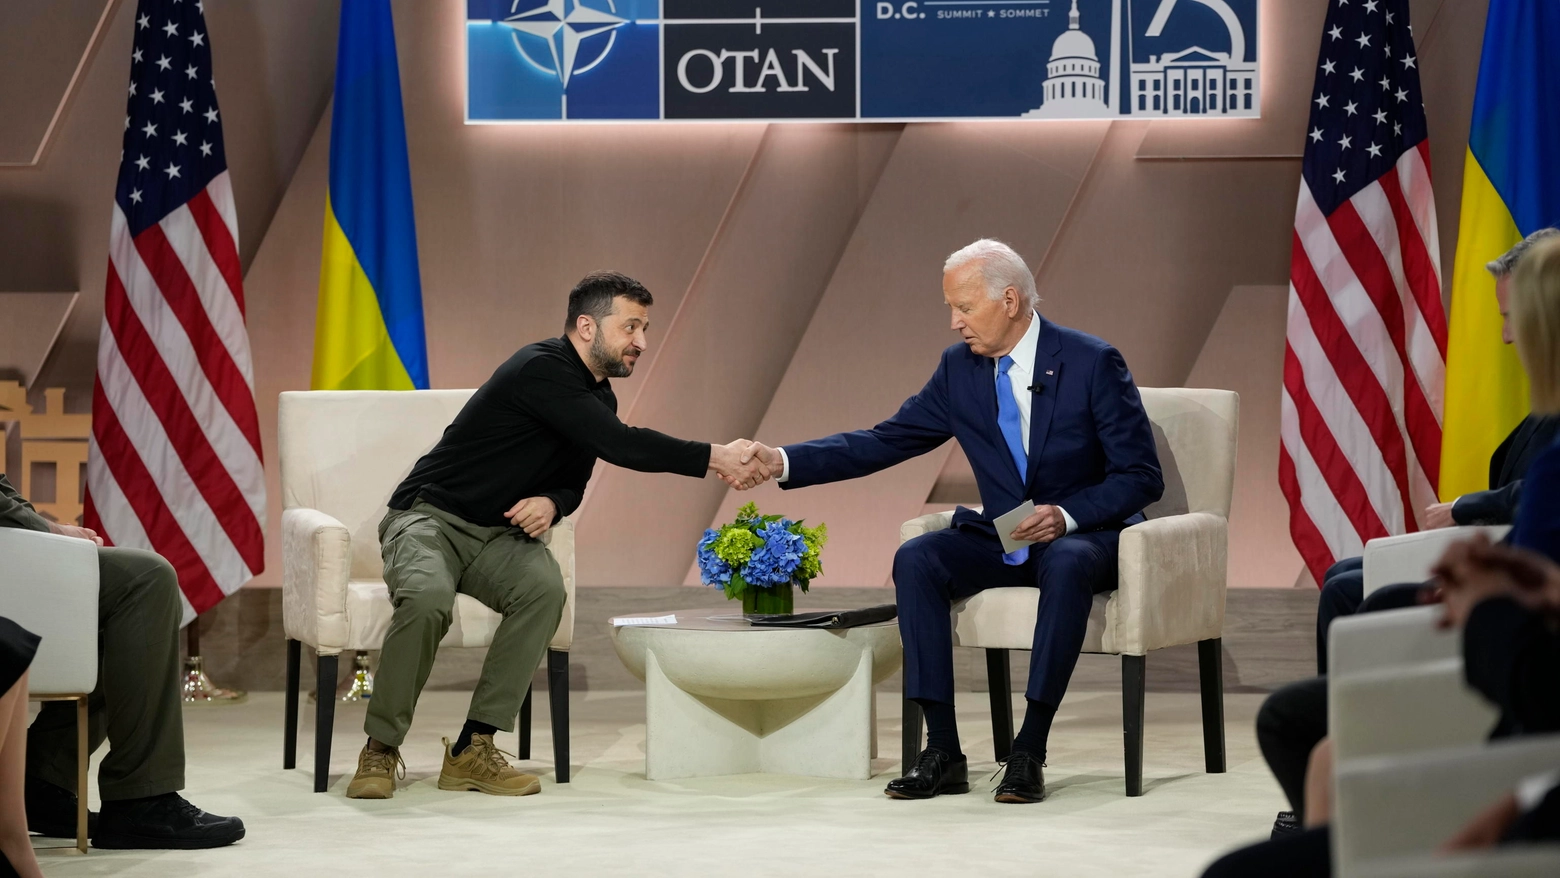 Il presidente Biden stringe la mano a Zelensky al vertice Nato di Washington (Epa)